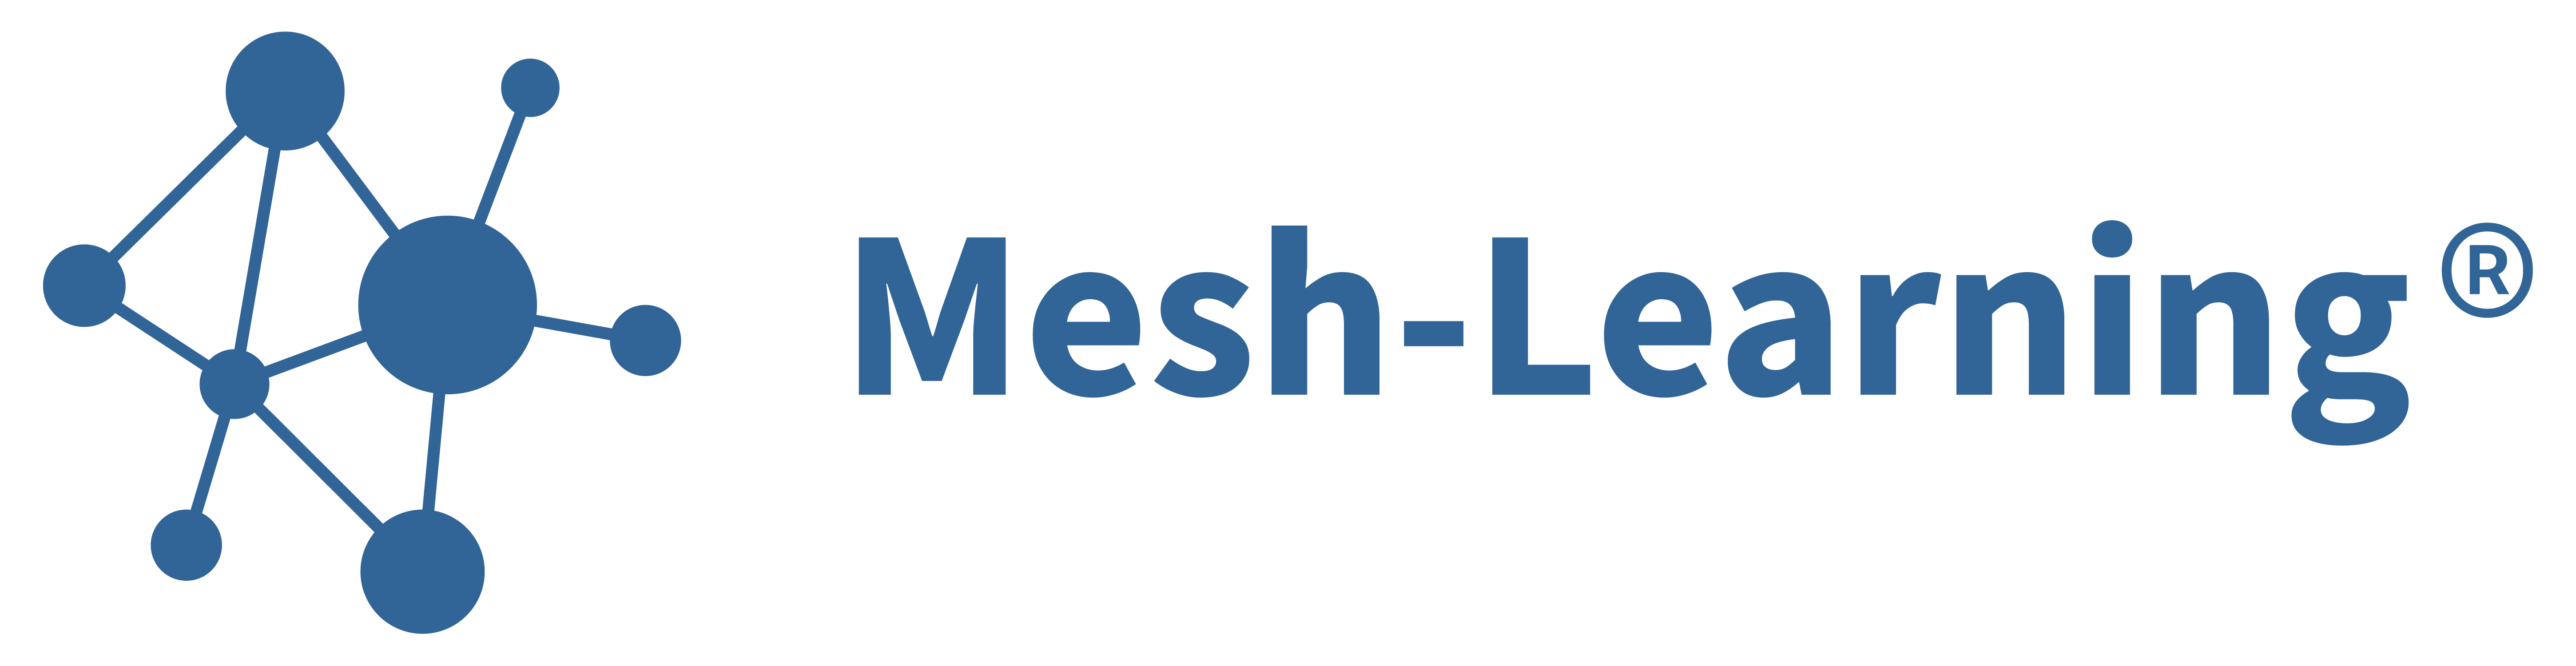 Mesh-Learning